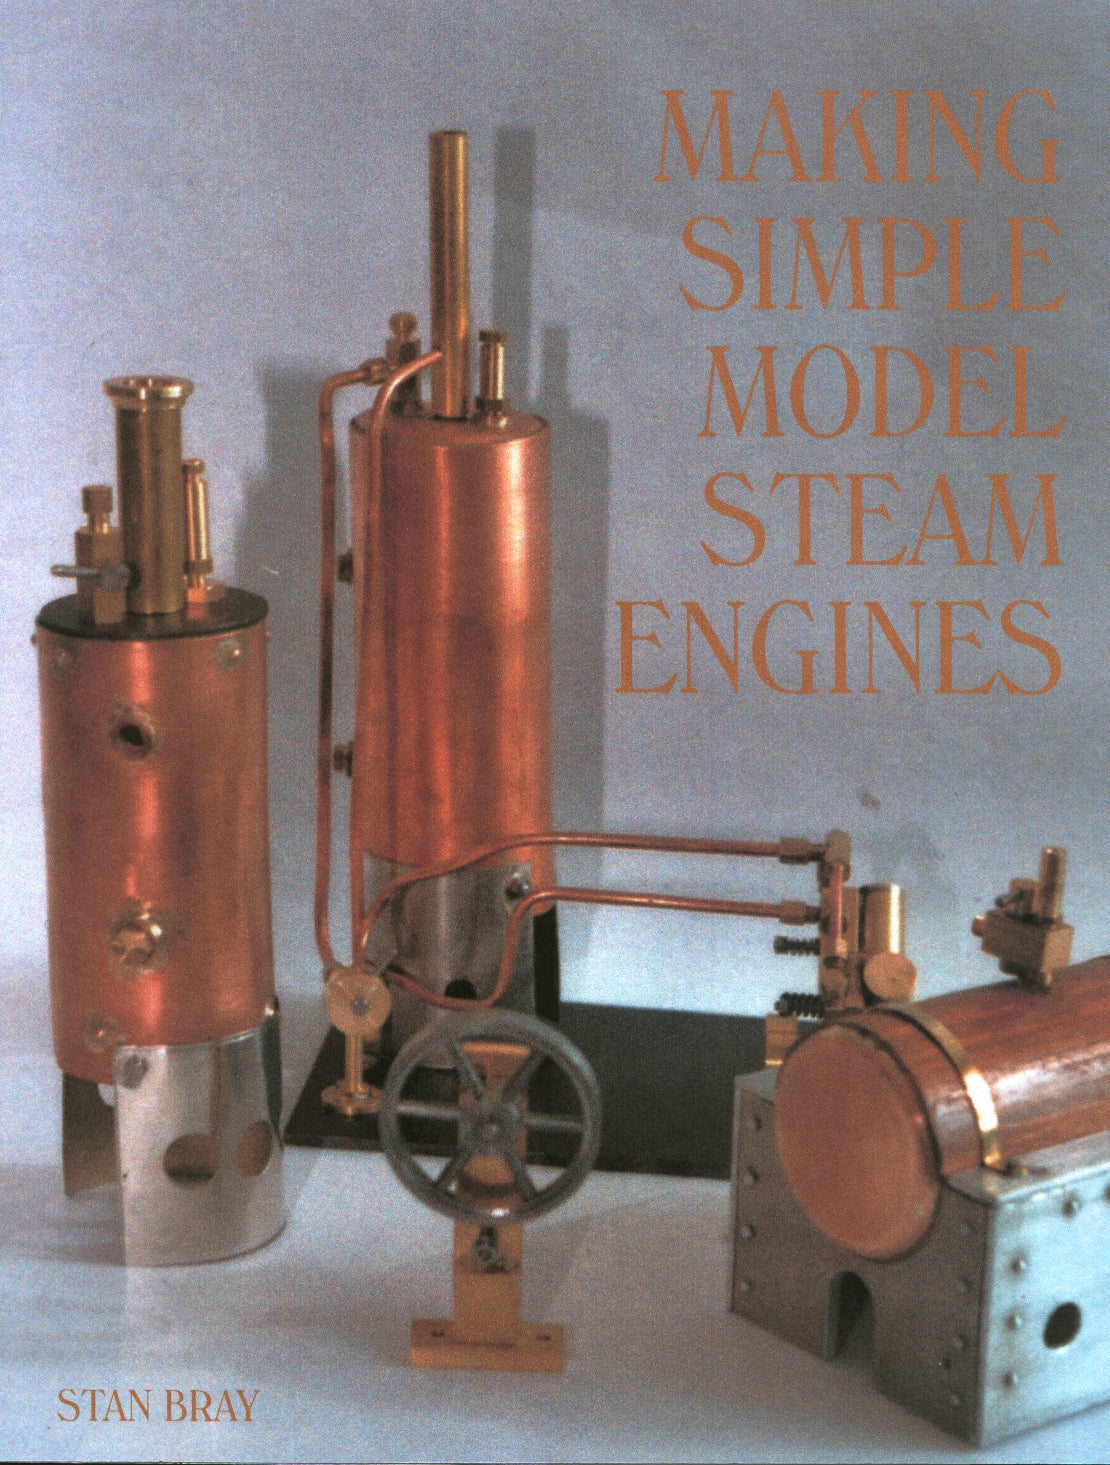 Making Simple Model Steam Engines